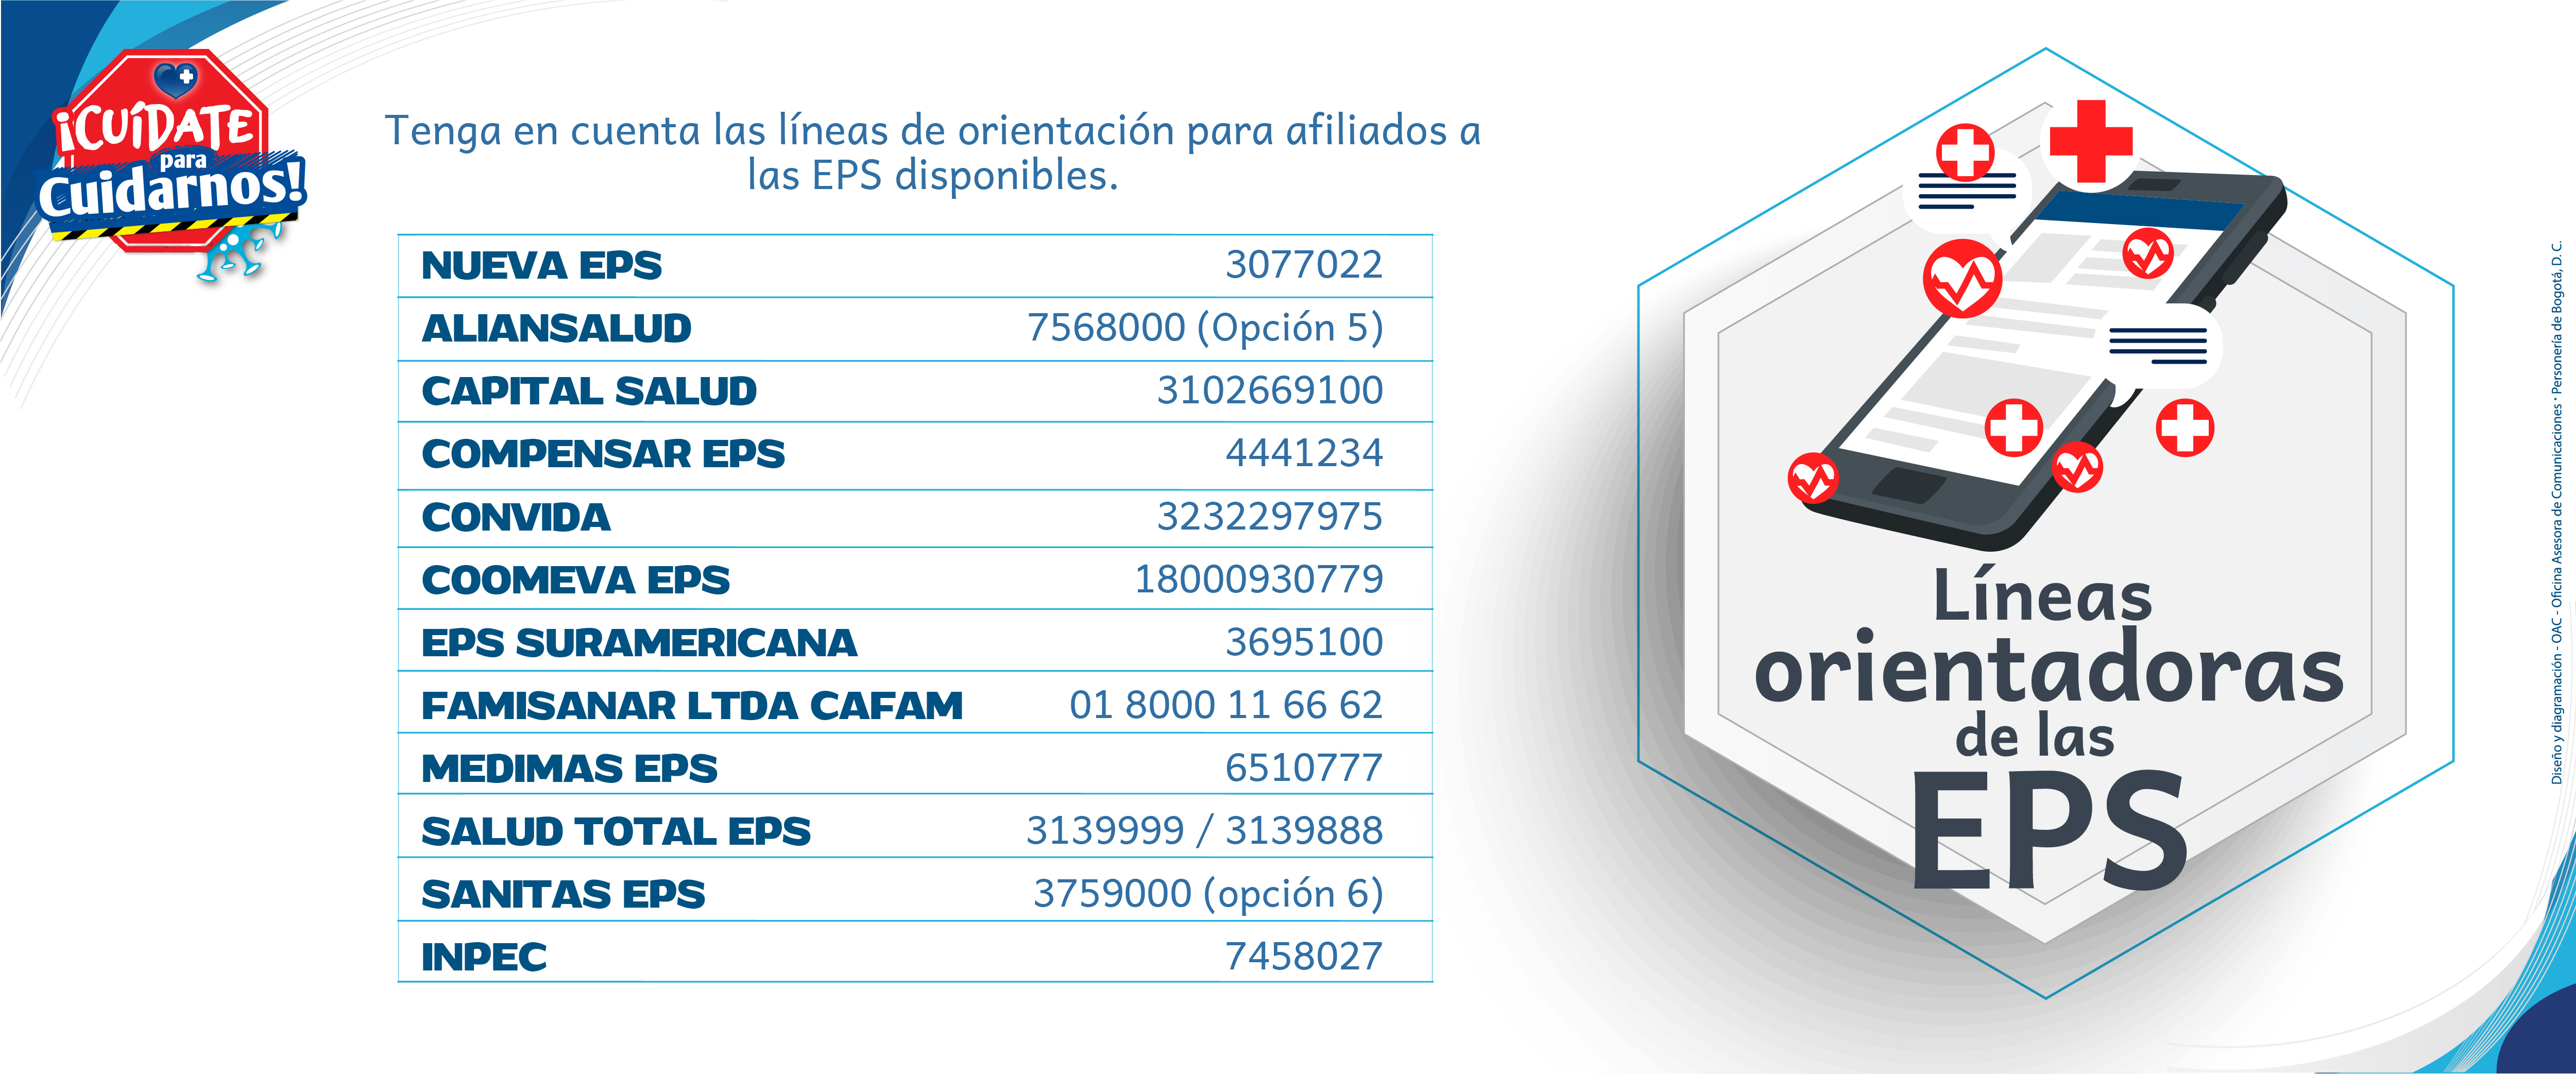 lineas_orientadoras_eps_banner_web_Mesa_de_trabajo_1.jpg - 1.34 MB